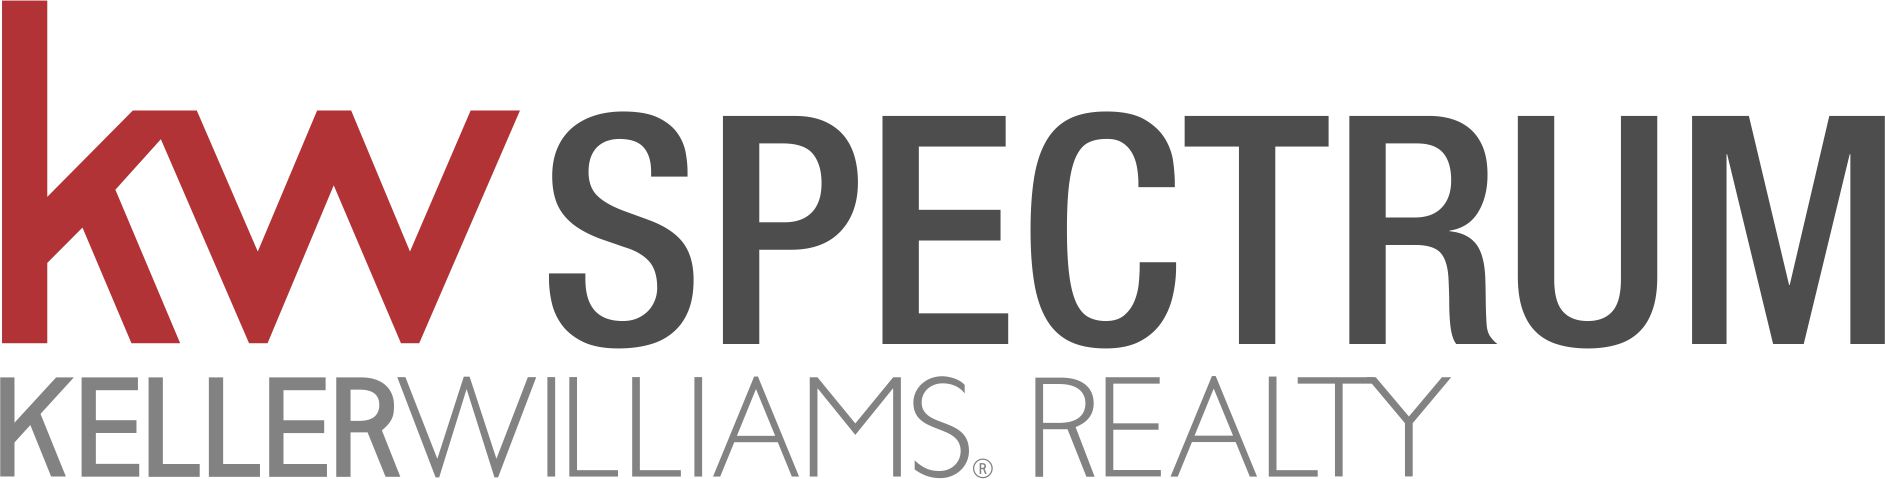 KW Spectrum office logo